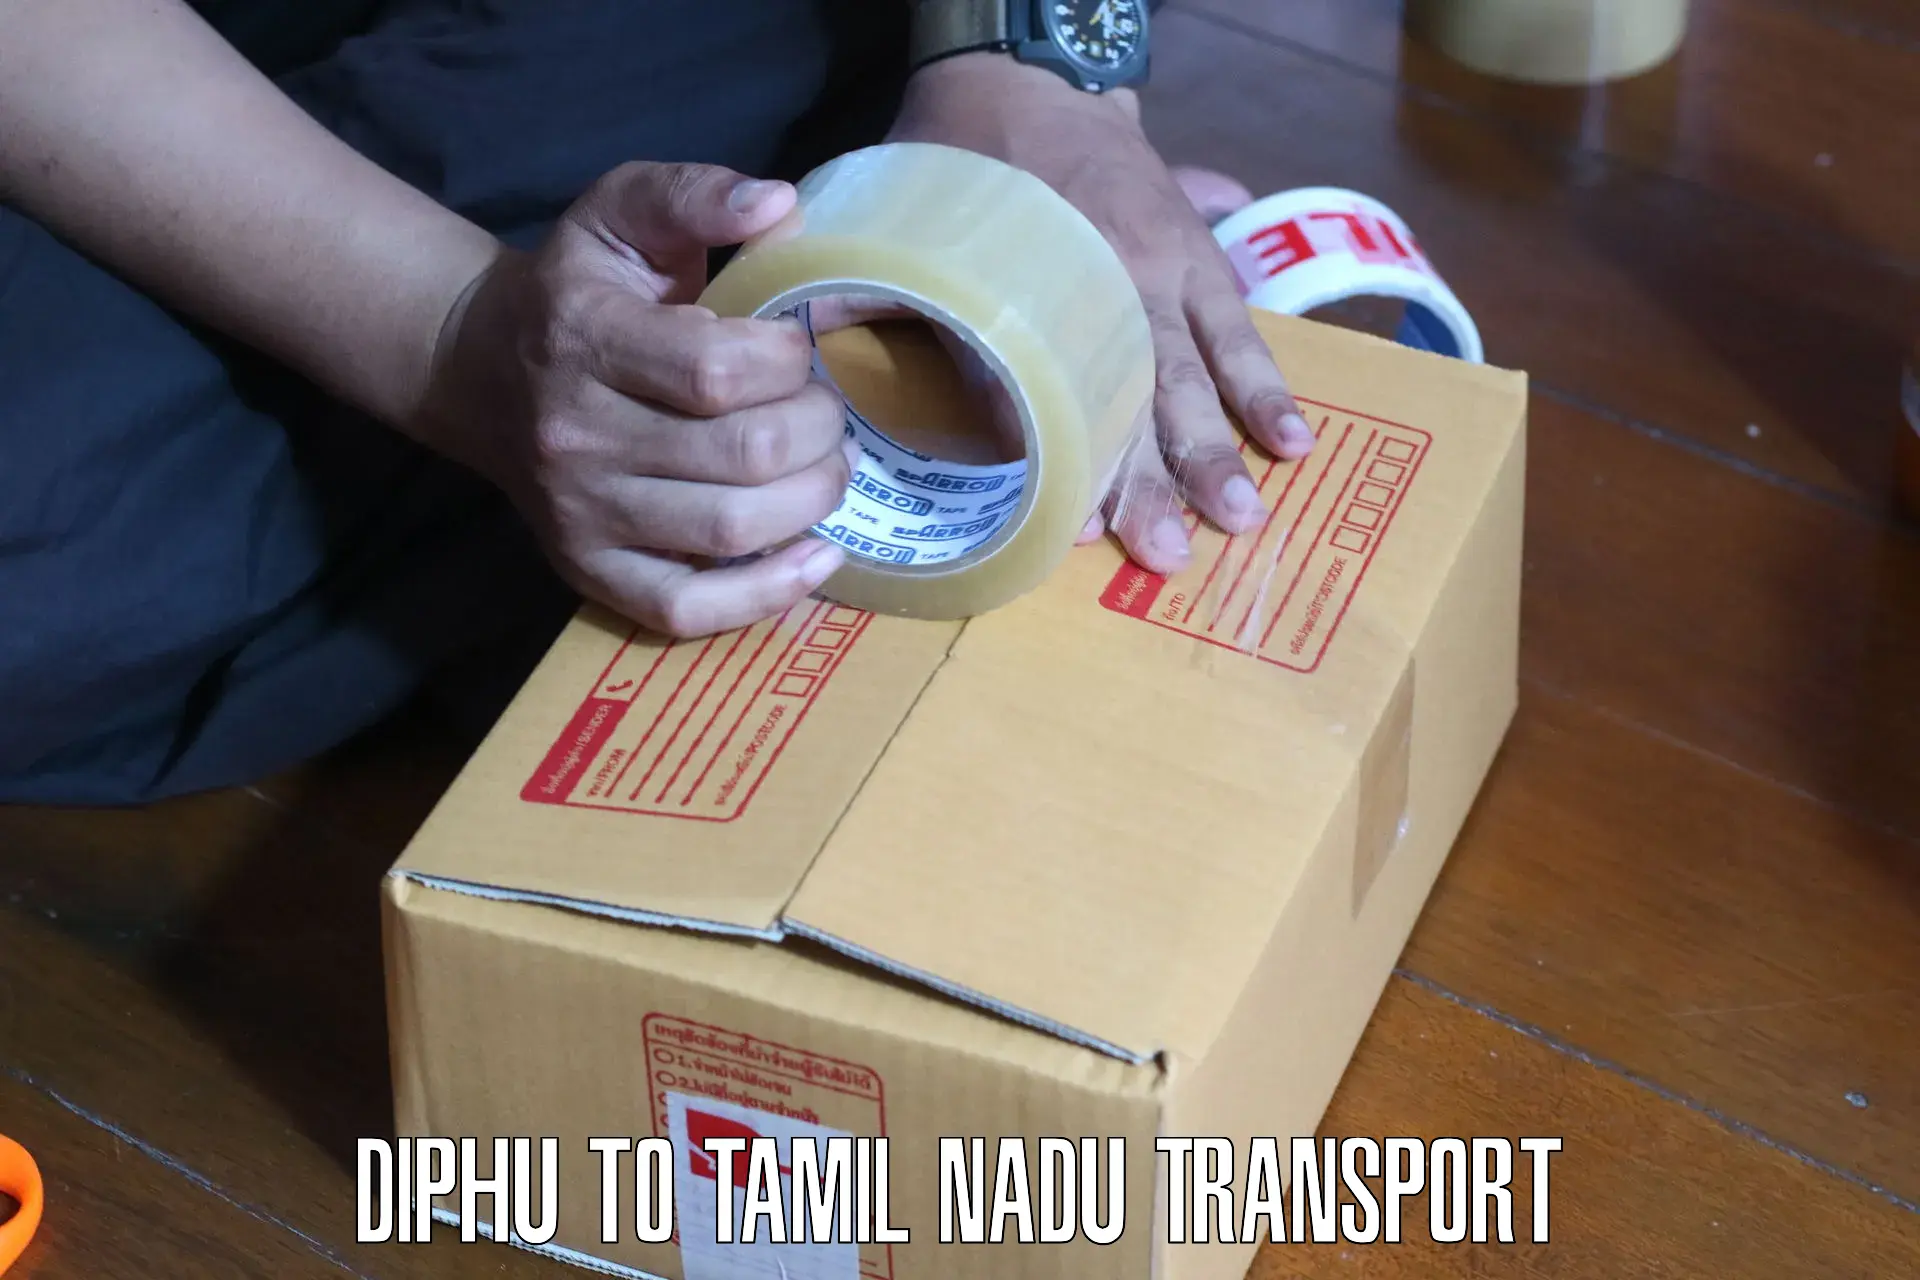 Pick up transport service Diphu to Tamil Nadu